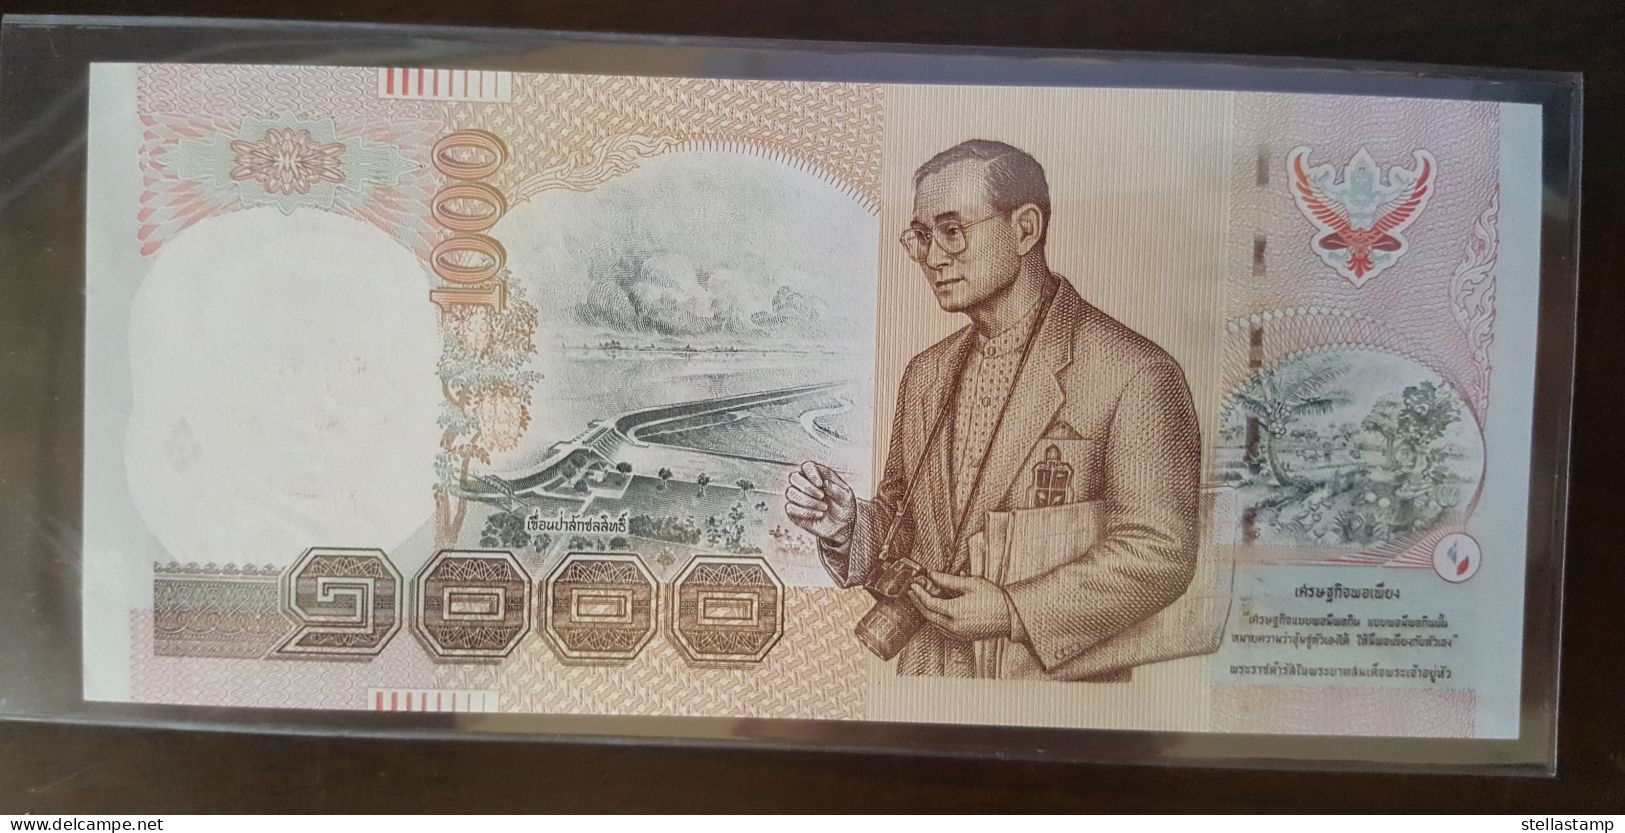 Thailand Banknote 1999 1000 Baht 72nd King P#104 - Thaïlande